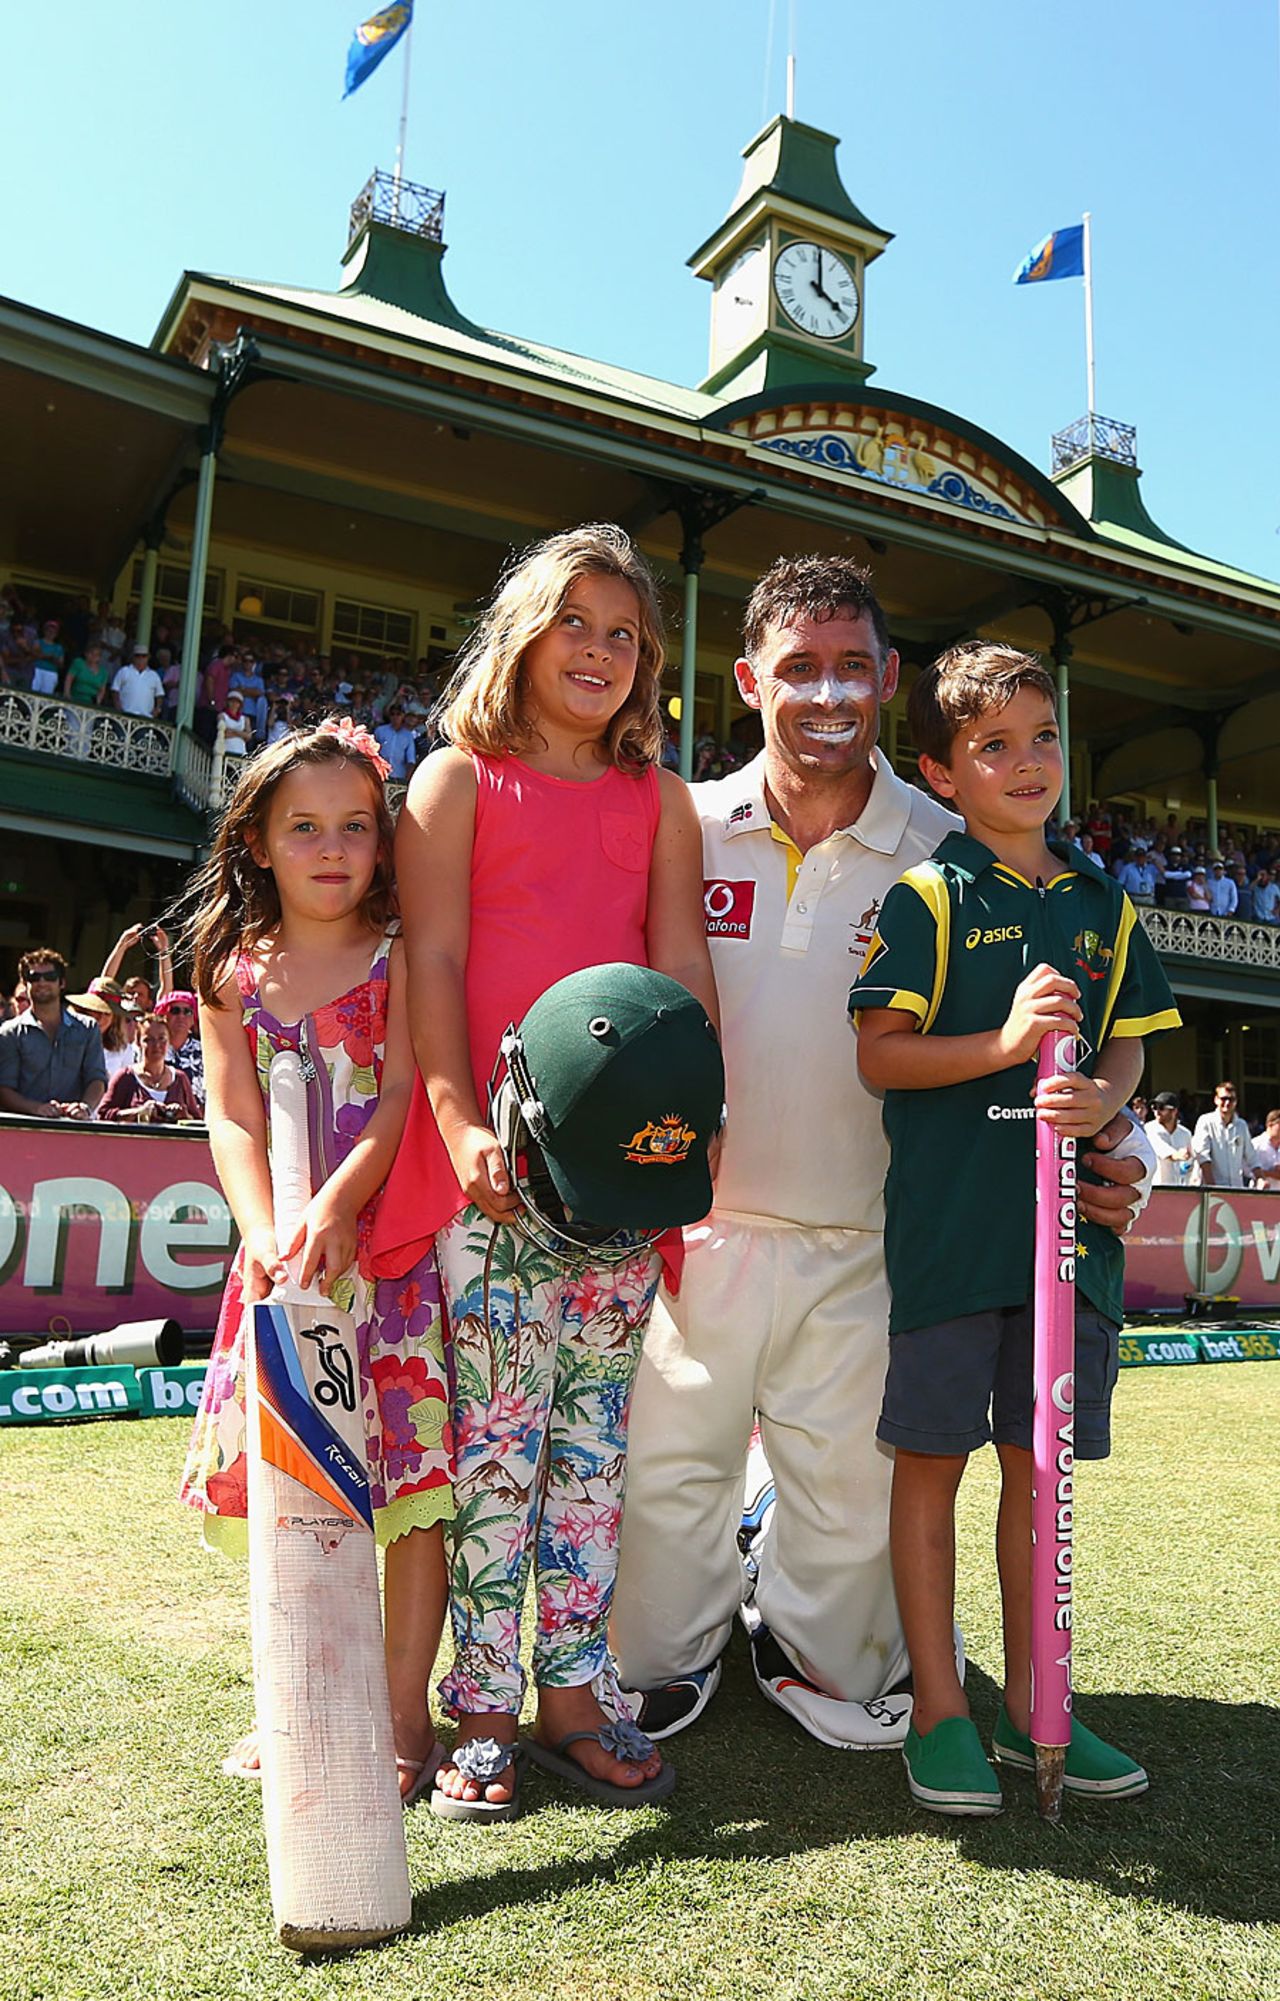 Michael Hussey poses with his kids, Australia v Sri Lanka, 3rd Test, Sydney, 4th day, January 6, 2013